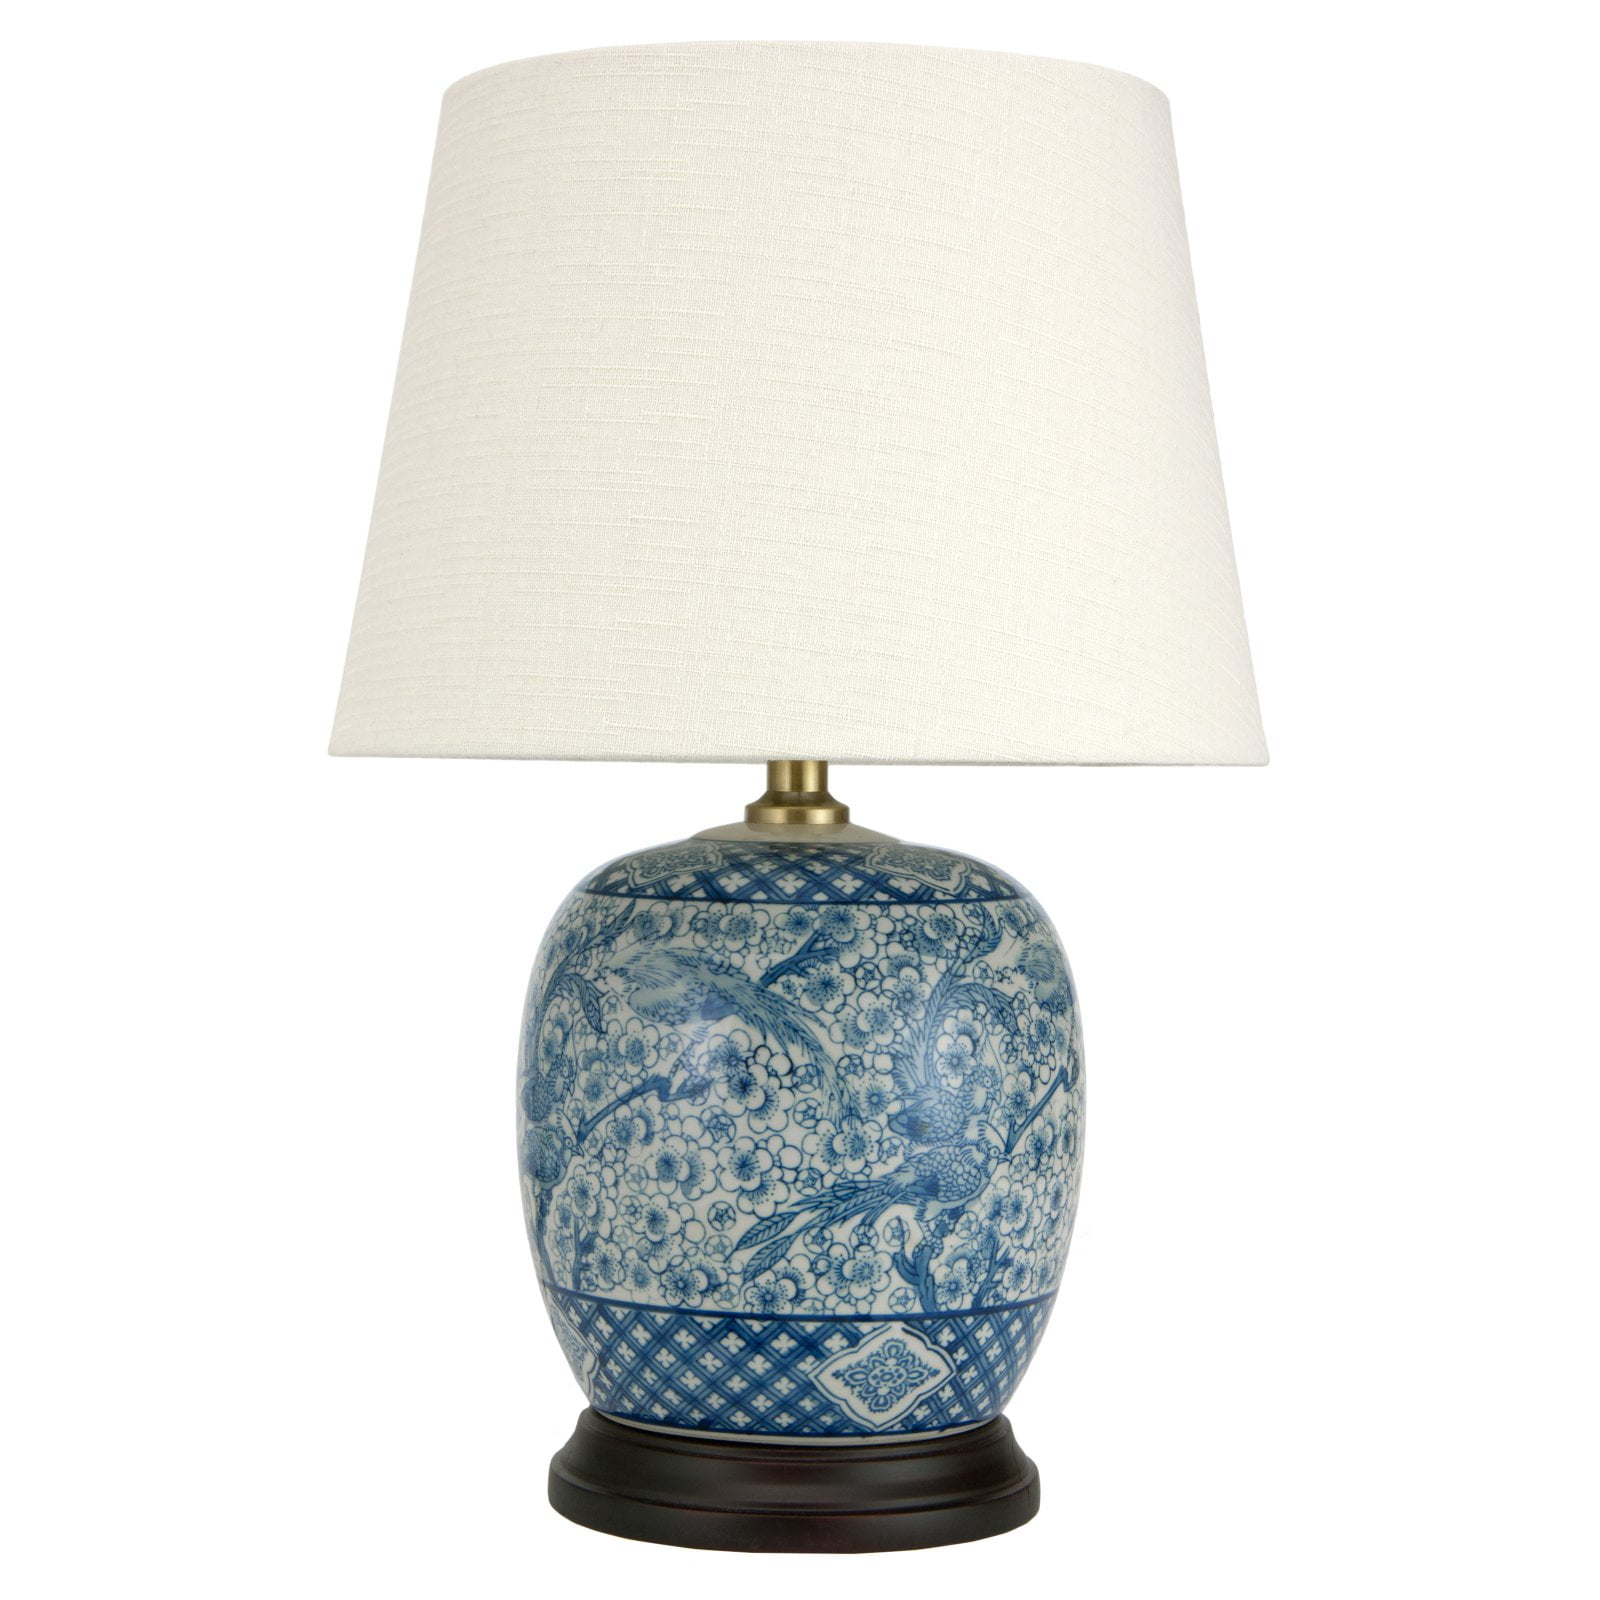 White Porcelain Jar Lamp, Classic White Table Lamps